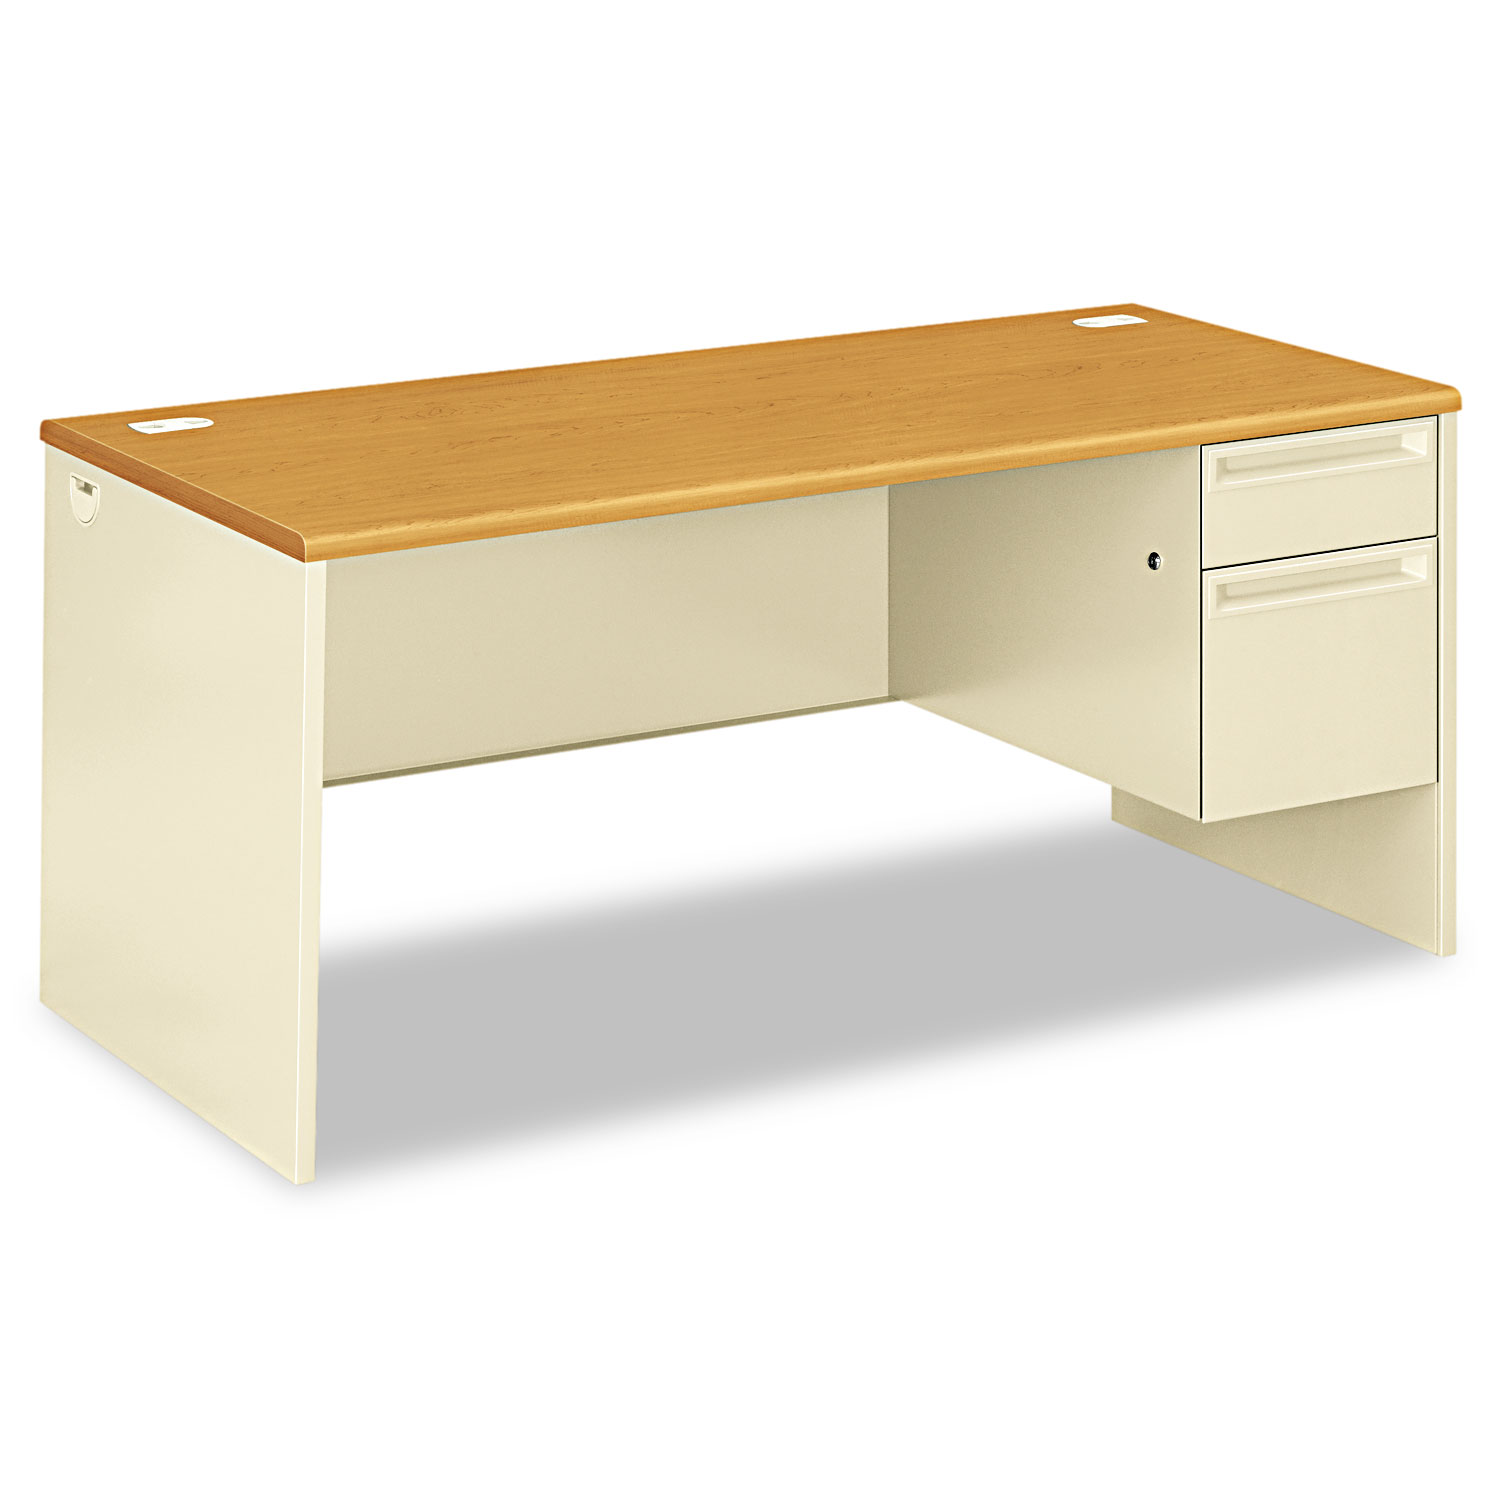  HON H38291R.C.L 38000 Series Right Pedestal Desk, 66w x 30d x 29.5h, Harvest/Putty (HON38291RCL) 